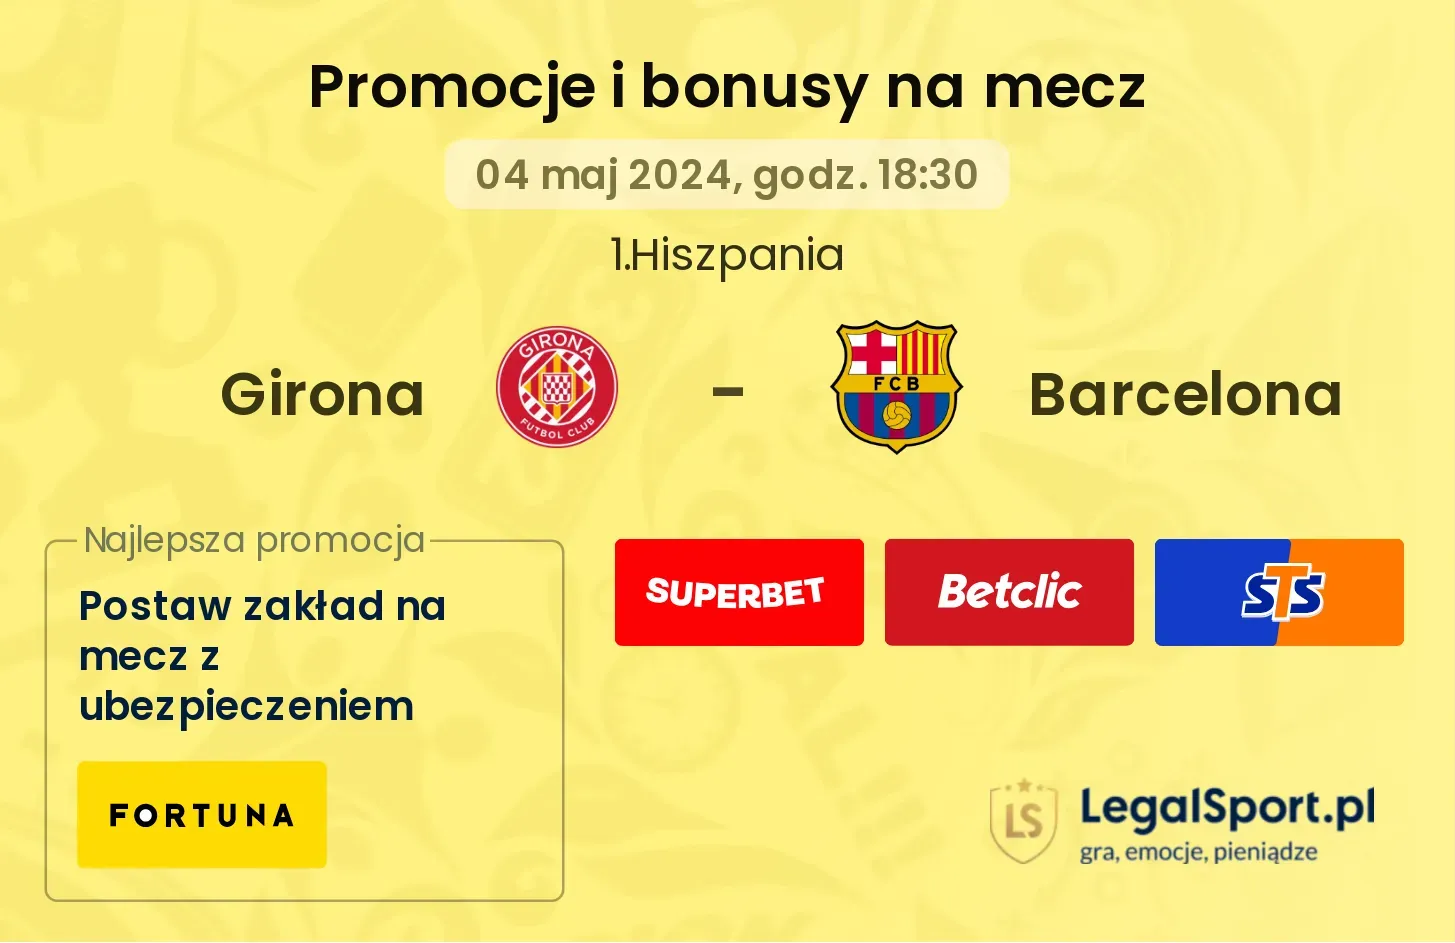 Girona - Barcelona bonusy i promocje (04.05, 18:30)